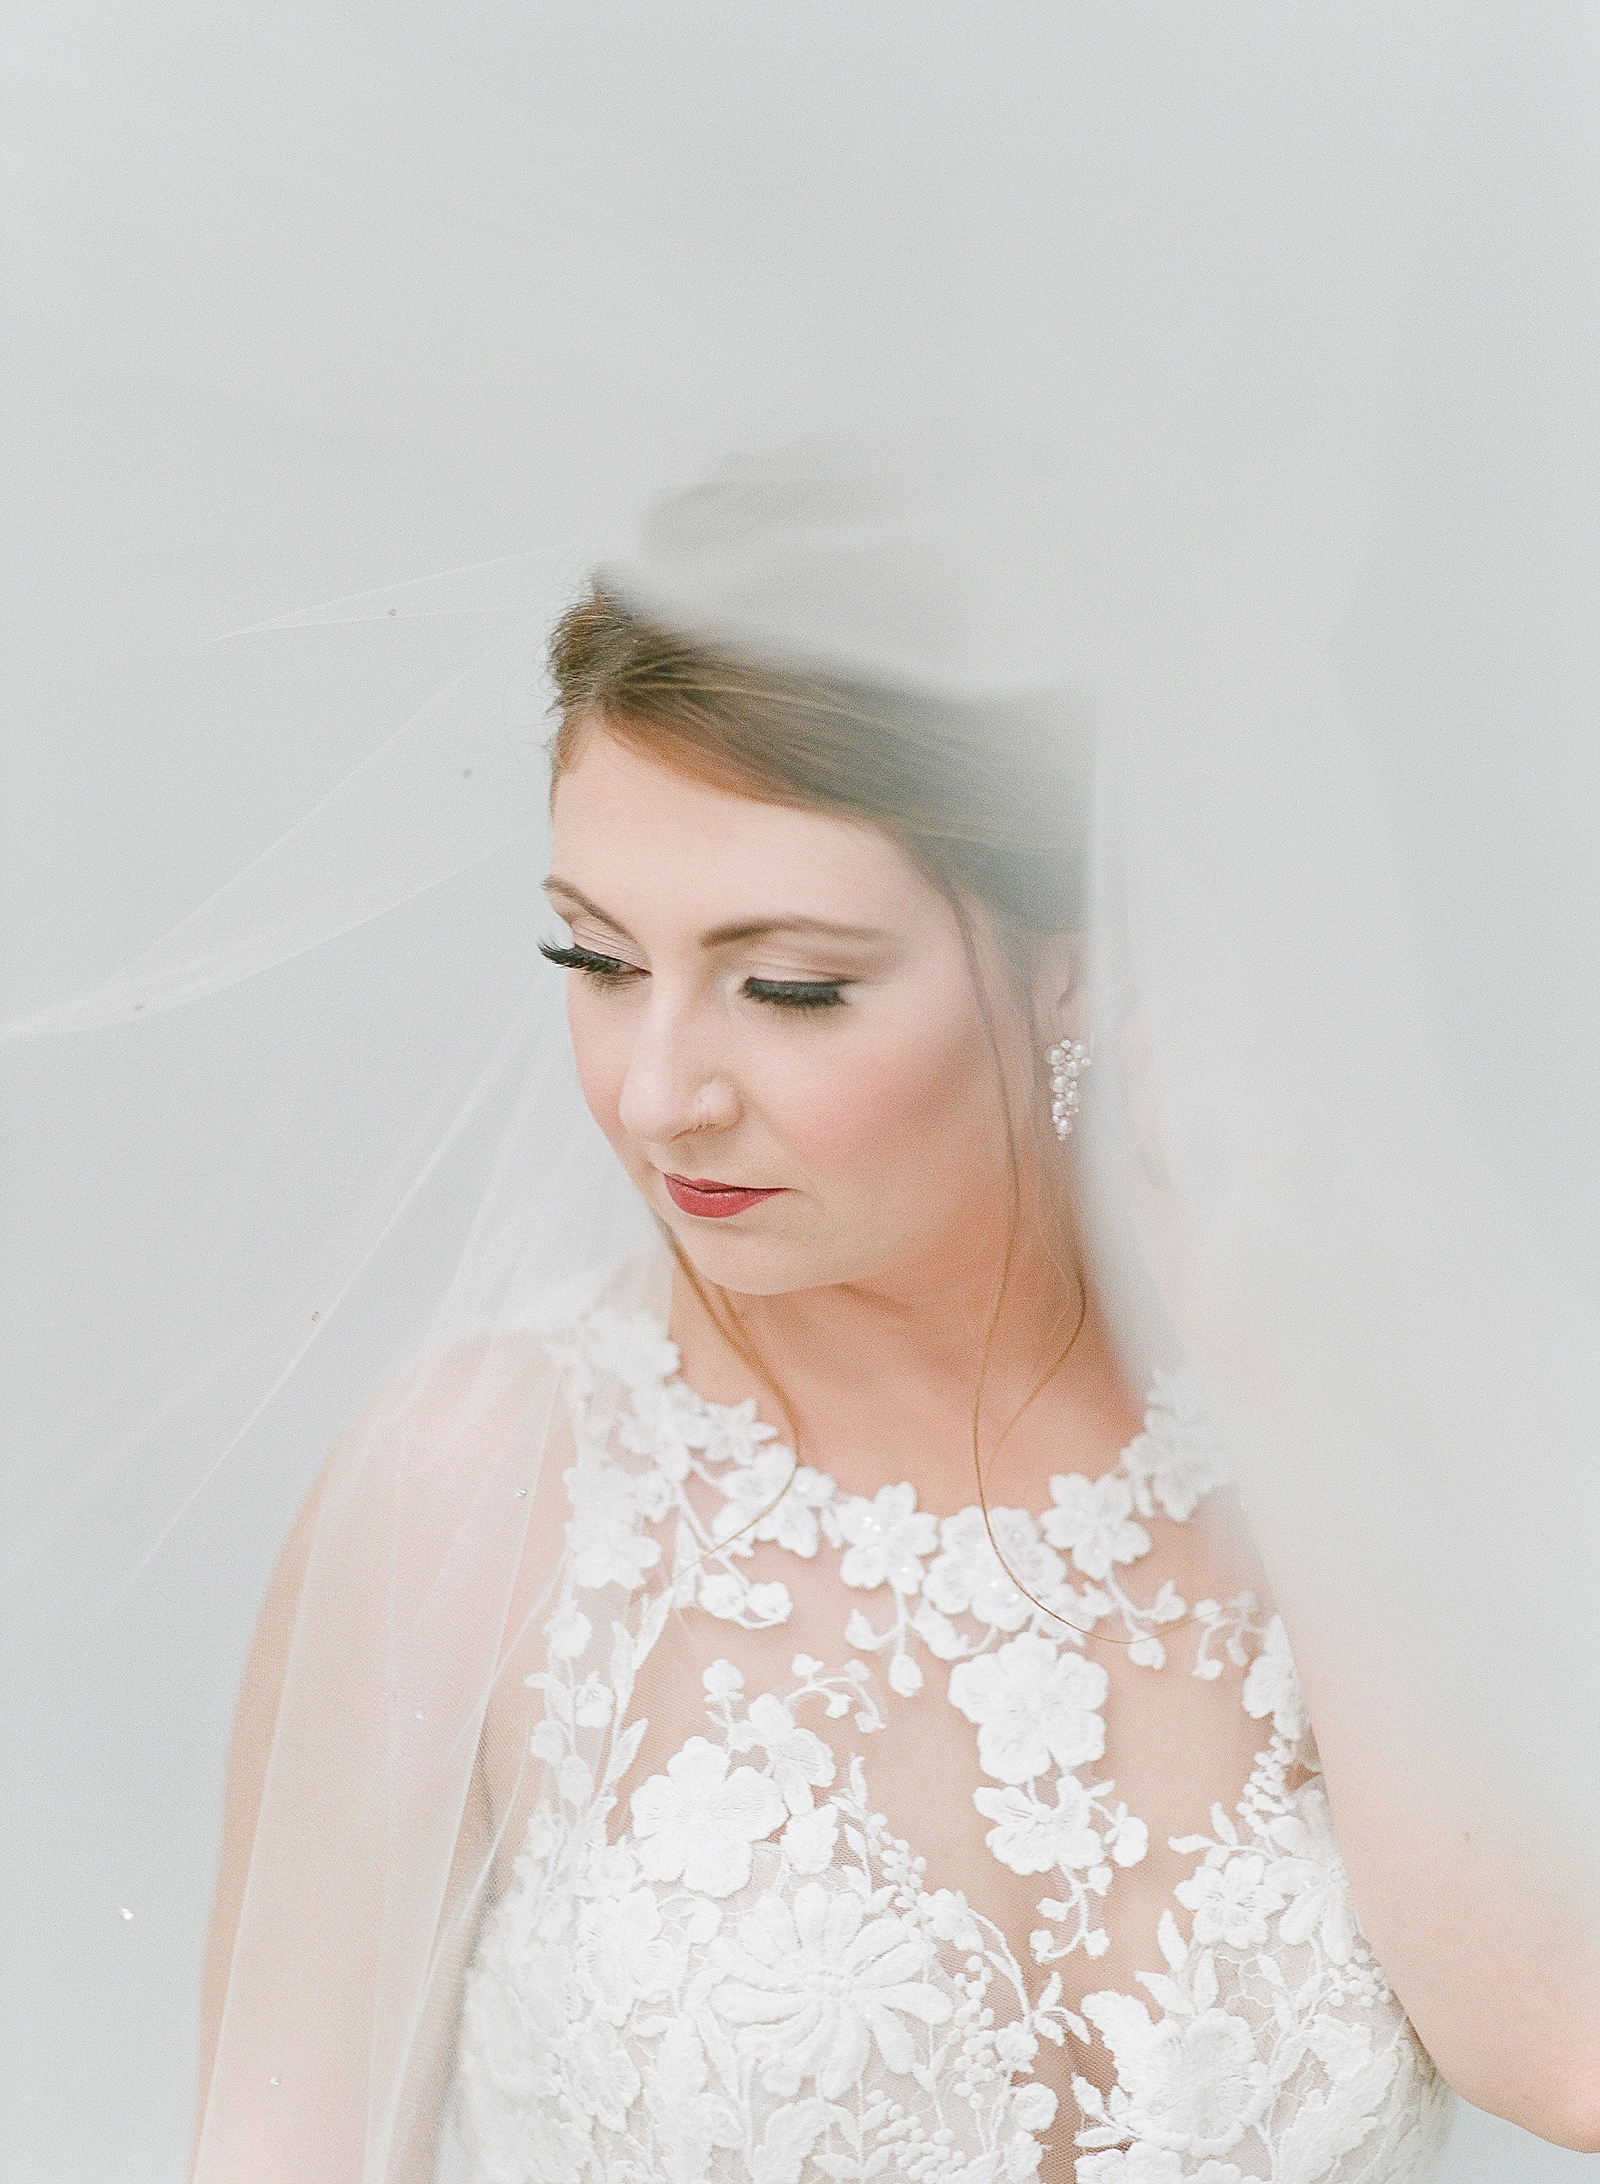 Asheville Bridal Editorial Bride Looking Down Under Veil Photo